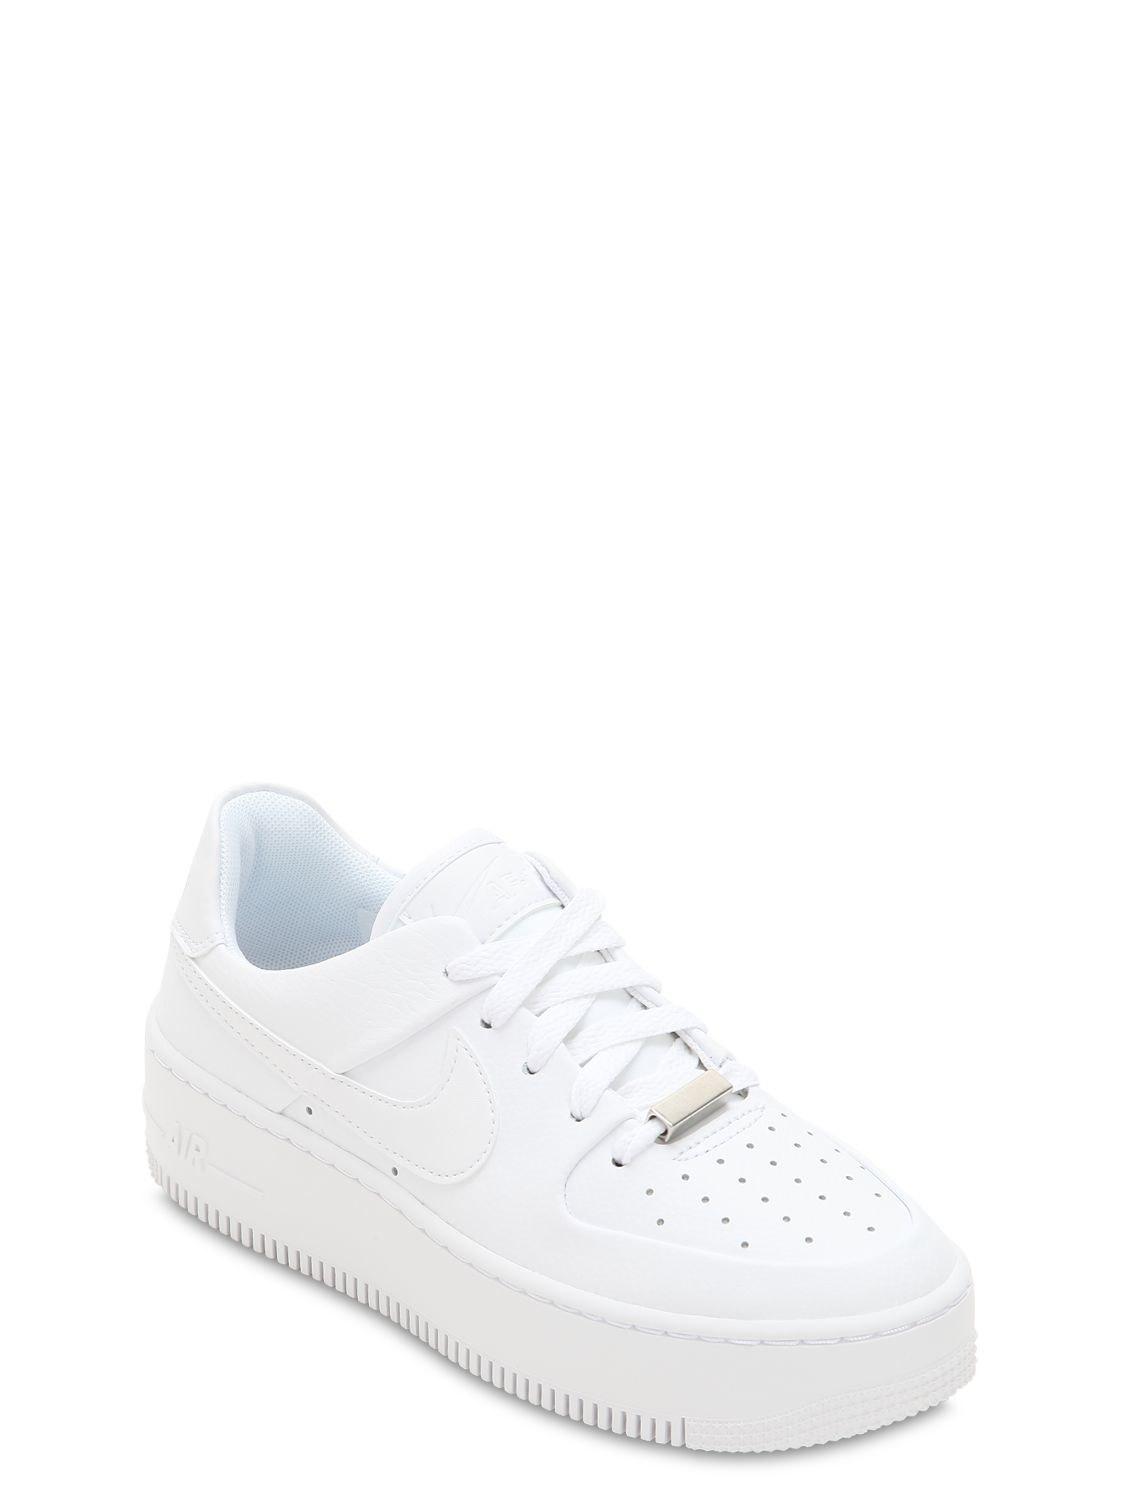 platform white nike sneakers